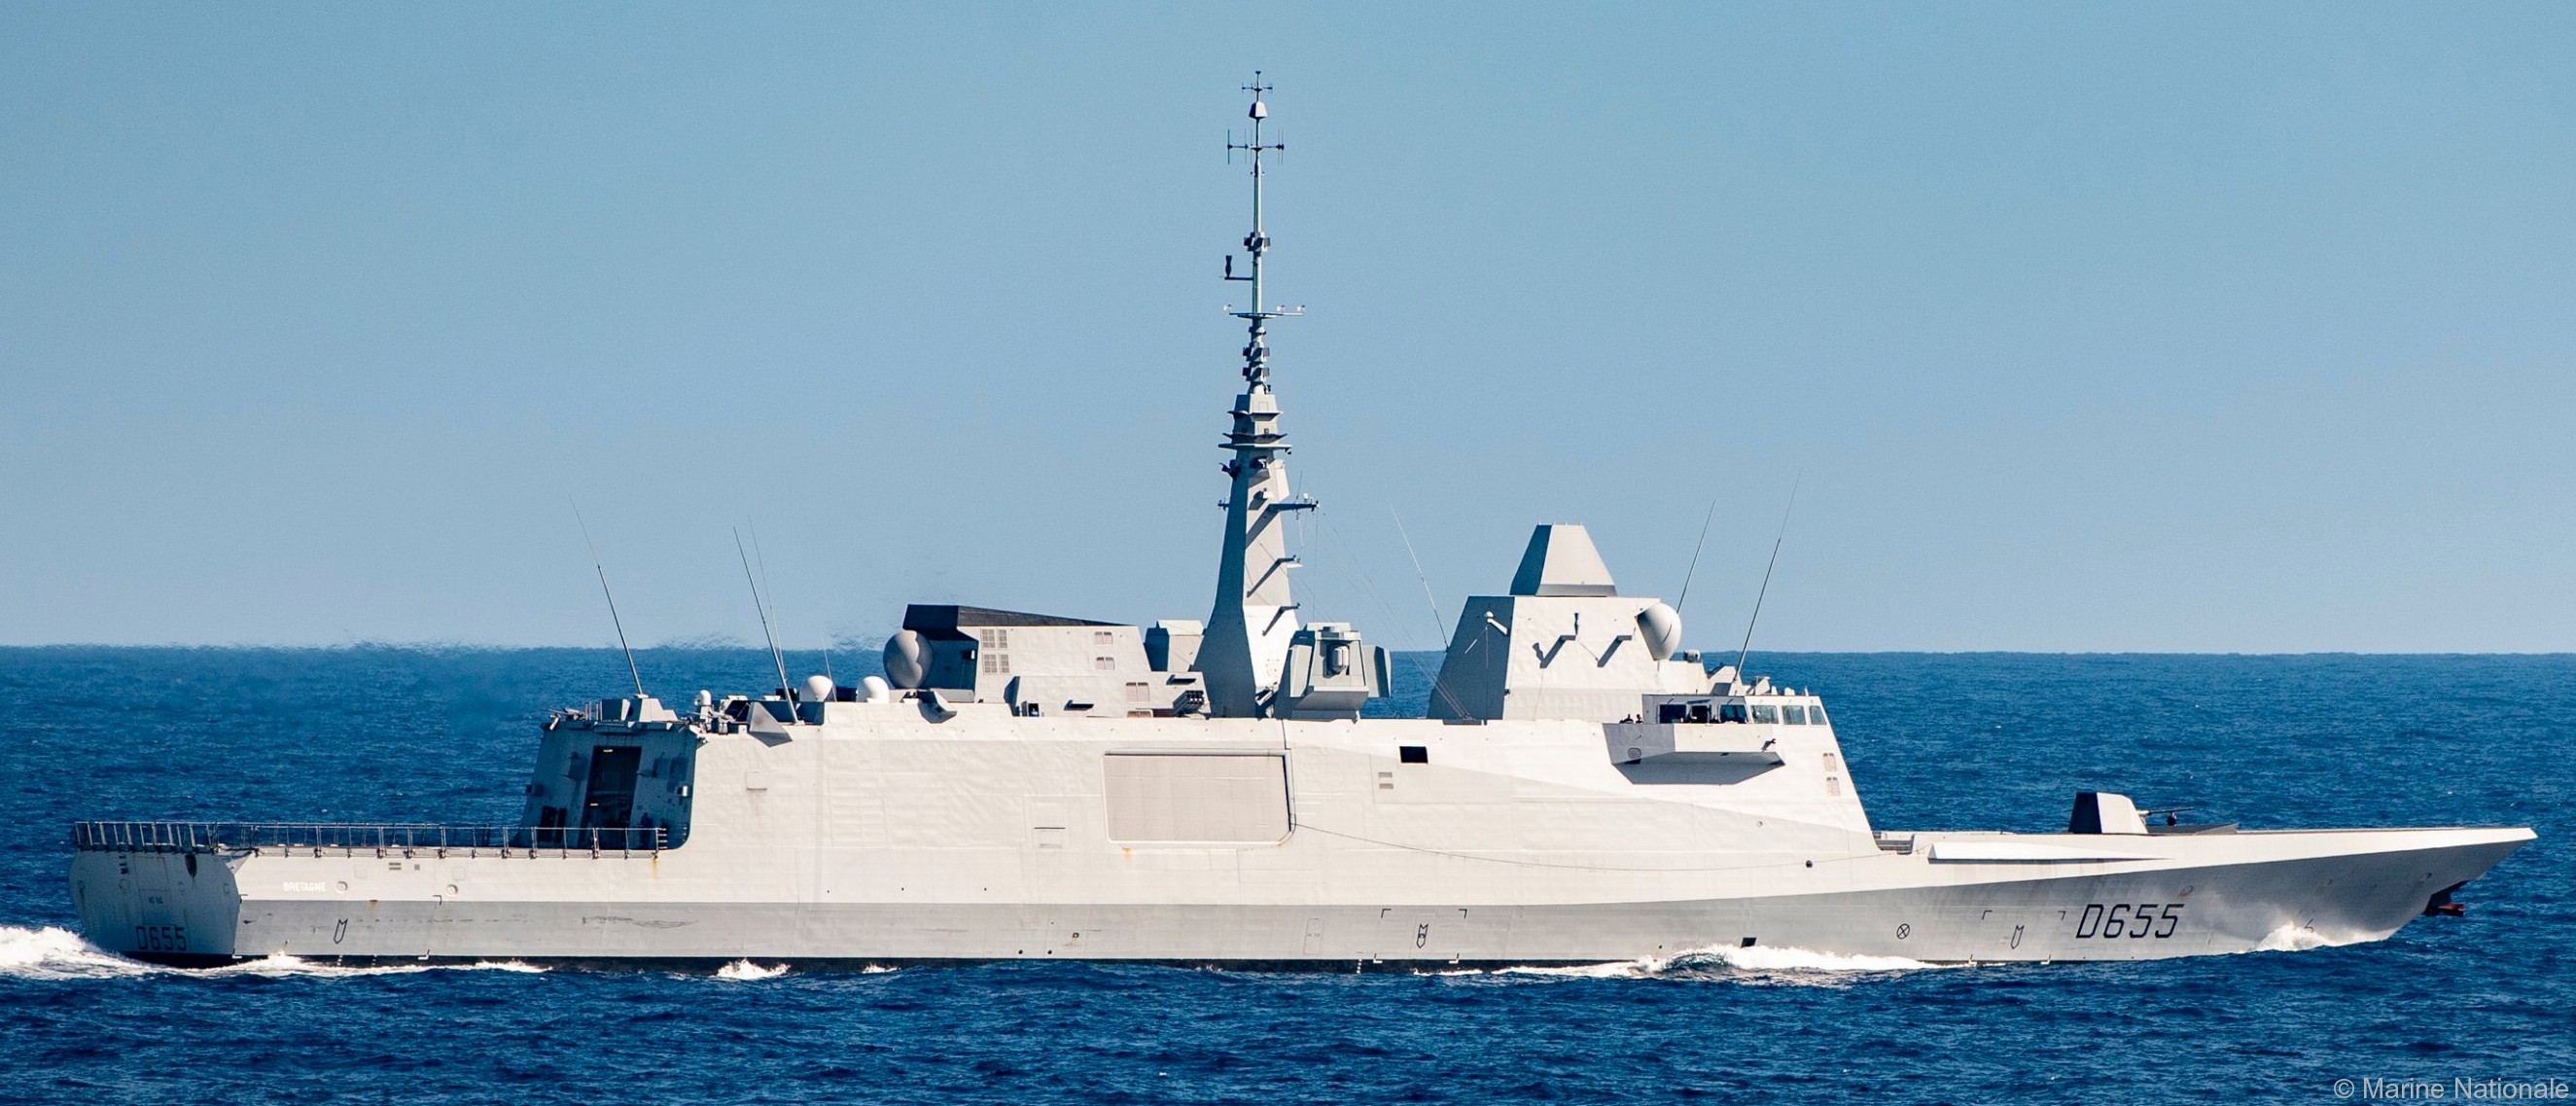 d-655 fs bretagne fremm aquitaine class frigate fregate multi purpose french navy marine nationale 17